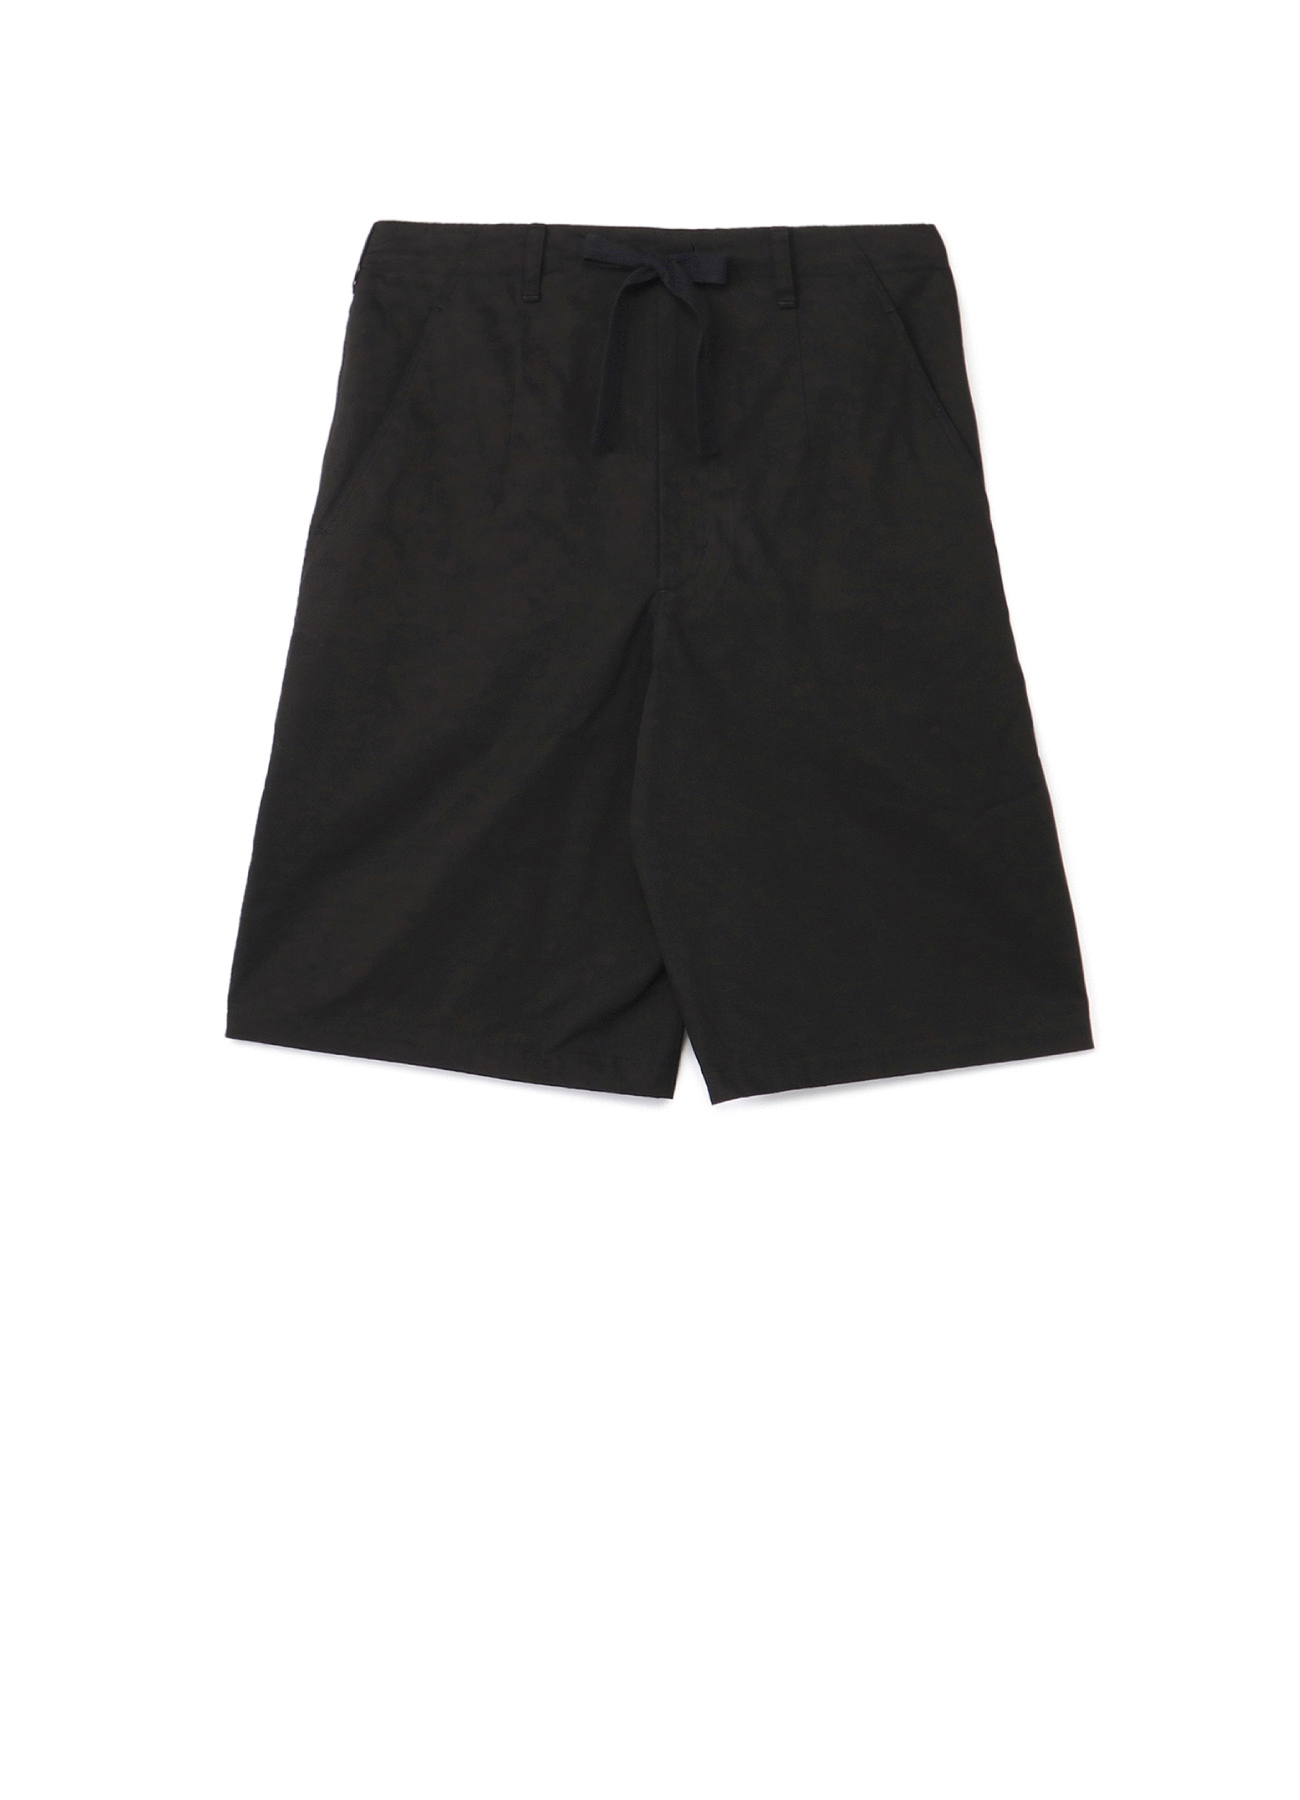 30/cotton twill 2way Shorts